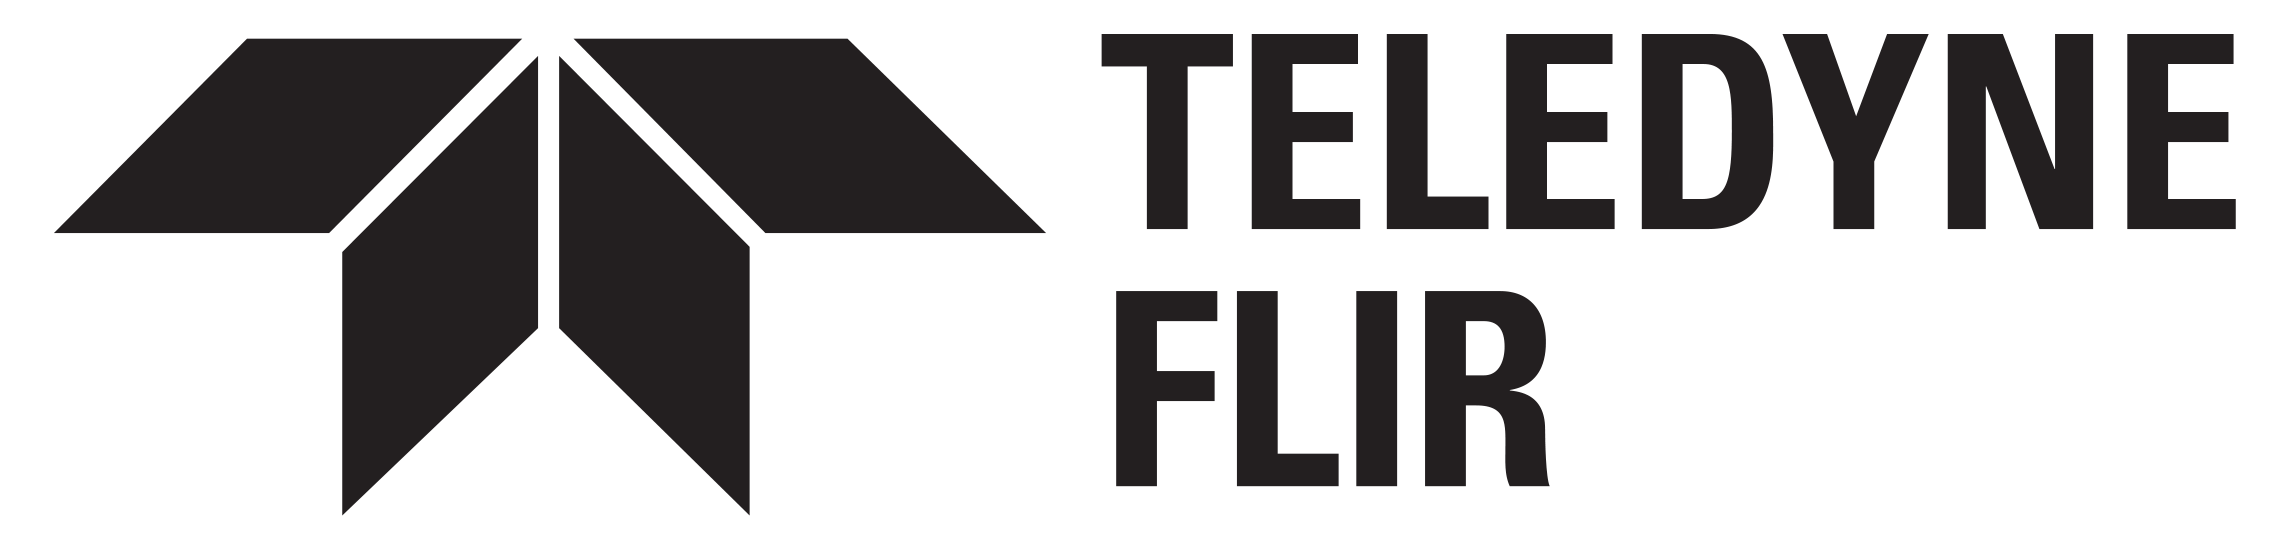 Teledyne FLIR_2 Line Logo_Black_without Everywhere Tagline.png